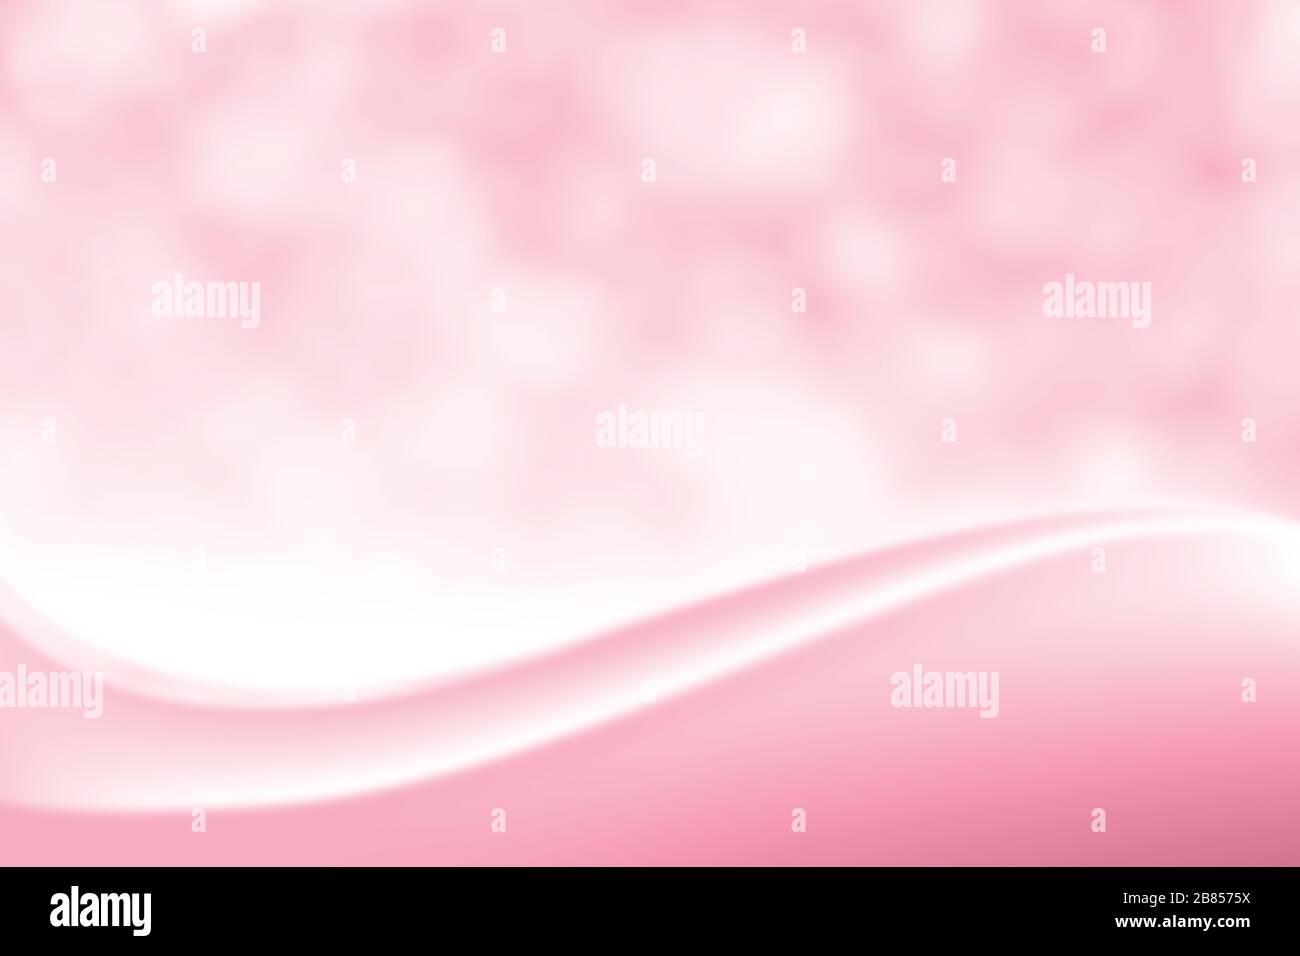 Premium Photo  Soft gradient banner with smooth blurred pink